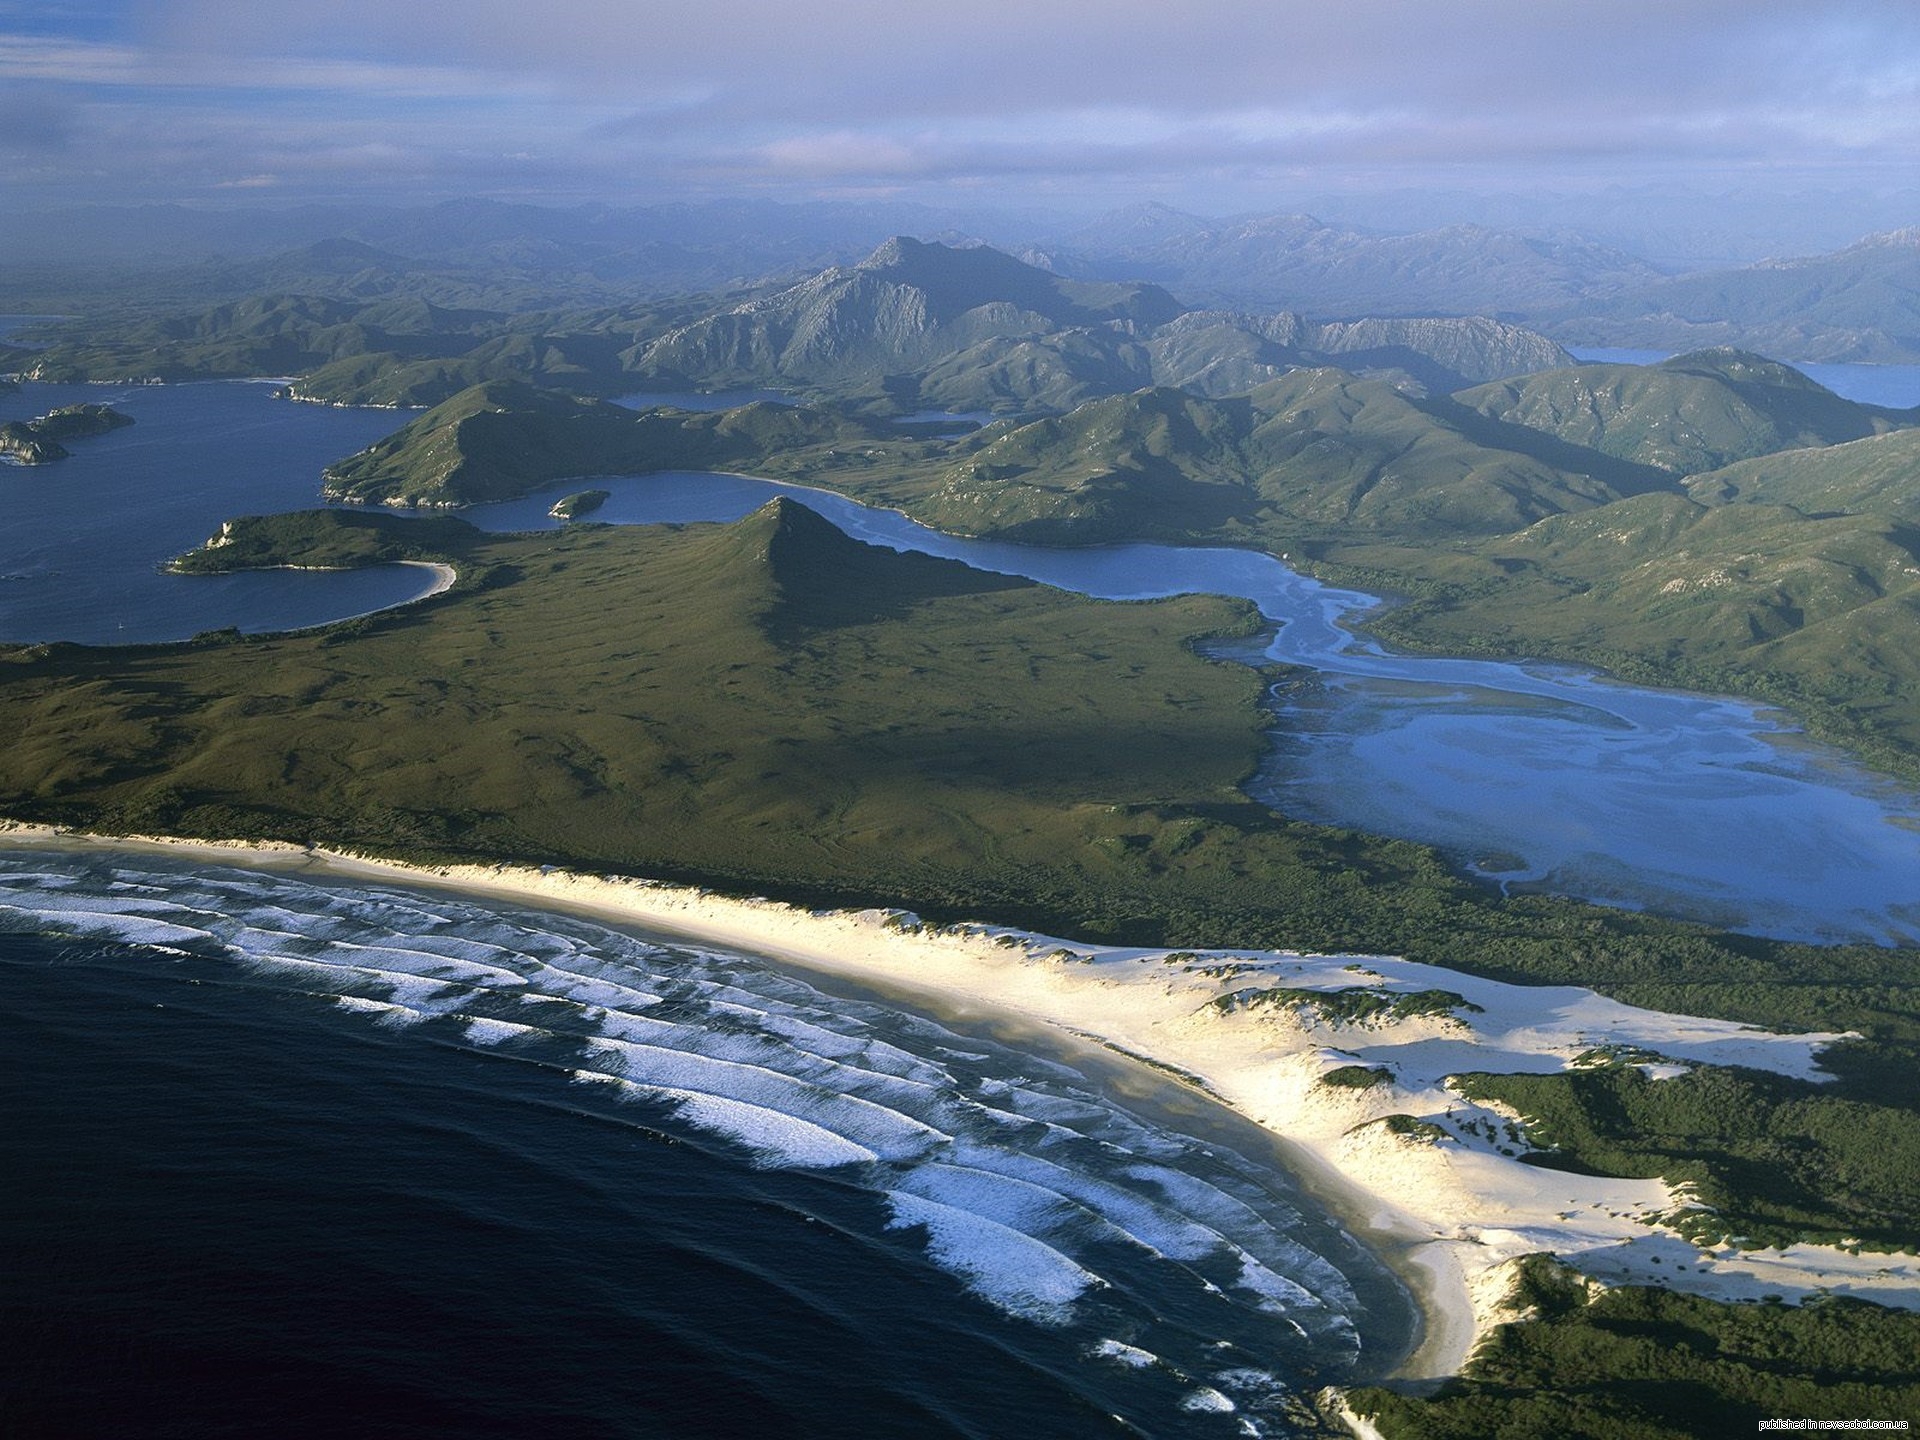 Австралия находка. Остров Тасмания Австралия. Материковые острова Тасмания. Остров Тасмания материк. Австралия Континент остров Тасмания.